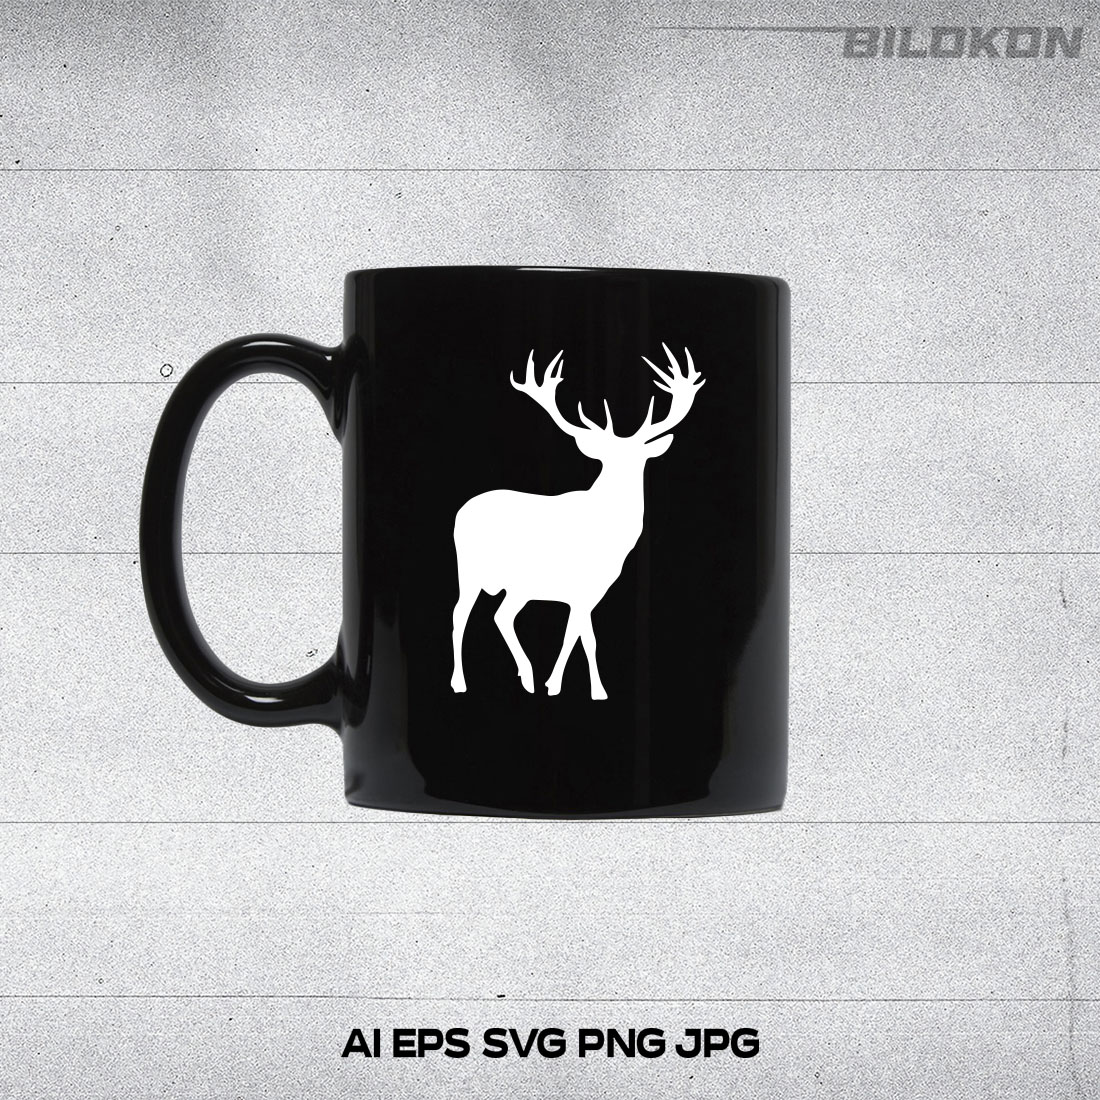 Black coffee mug with a white deer on it.